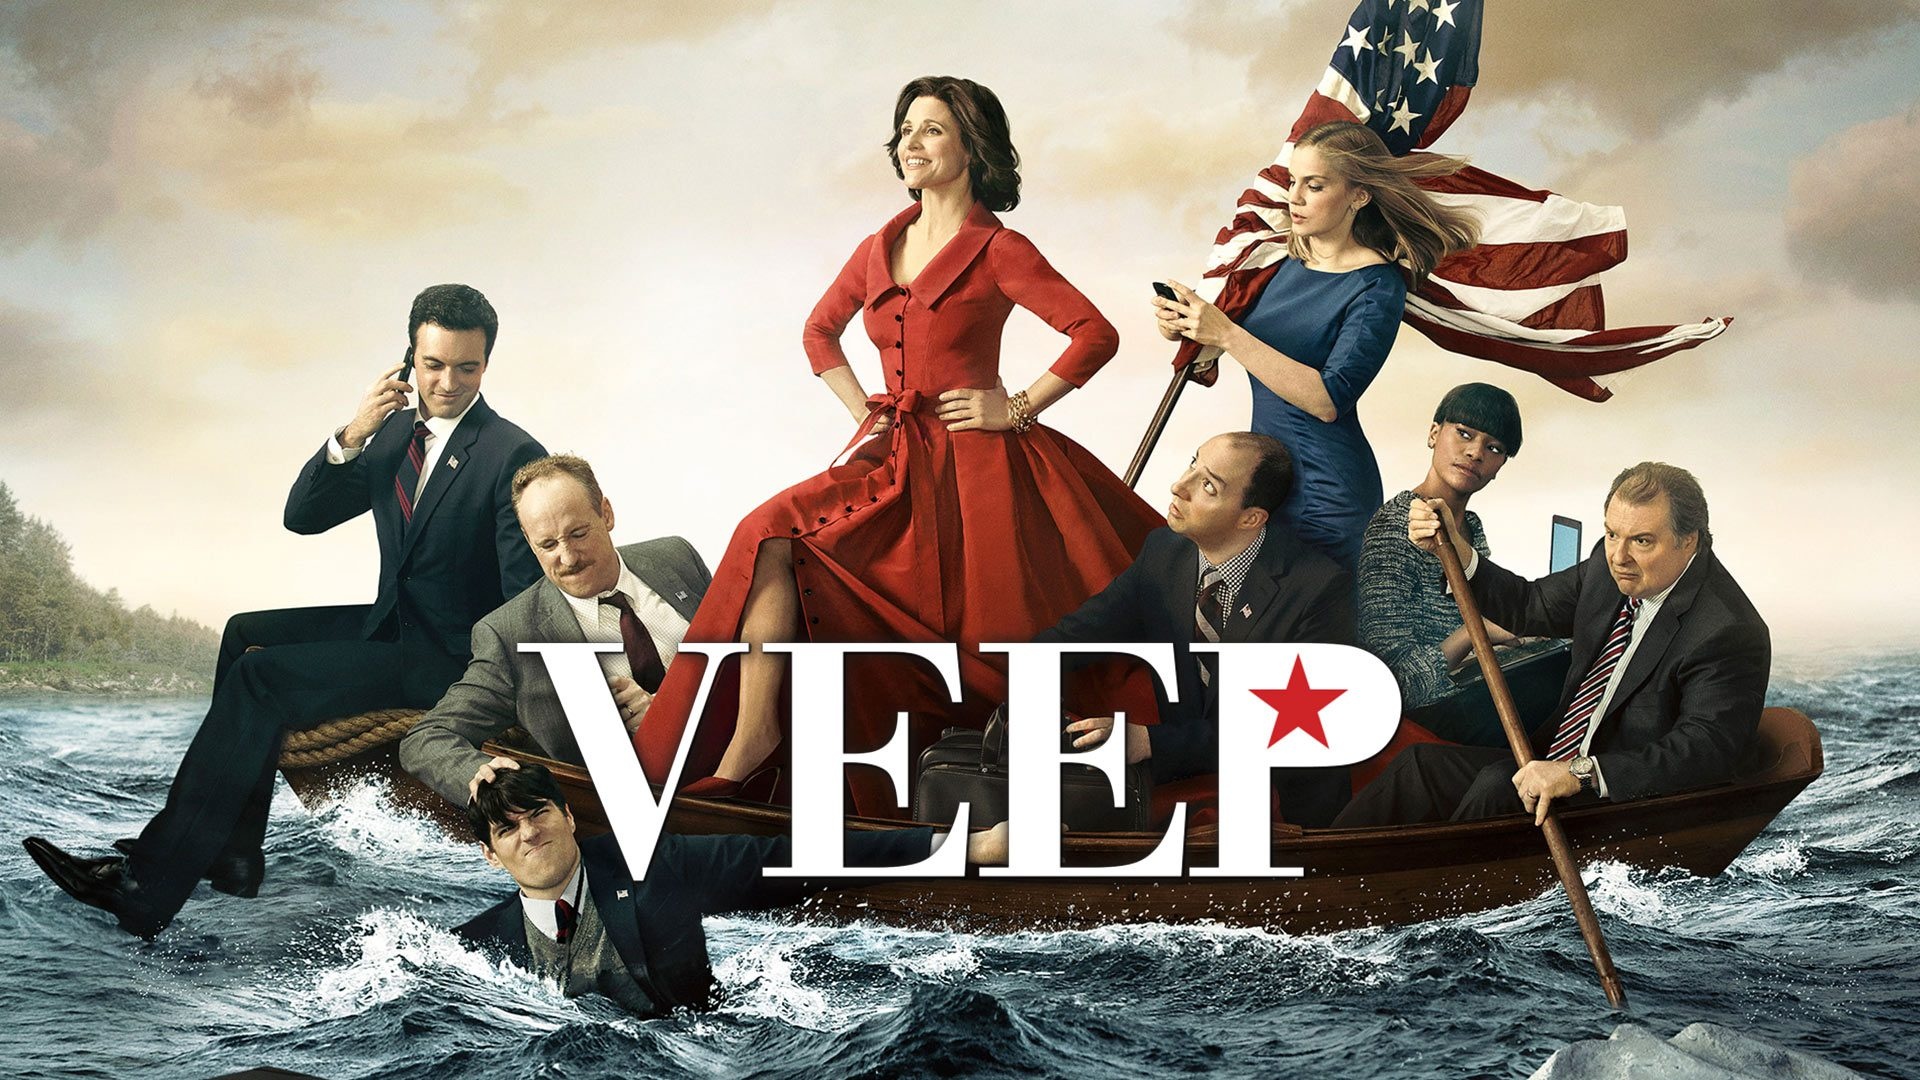 Veep TV show, Political satire, Julia Louis-Dreyfus, Emmy-winning, 1920x1080 Full HD Desktop